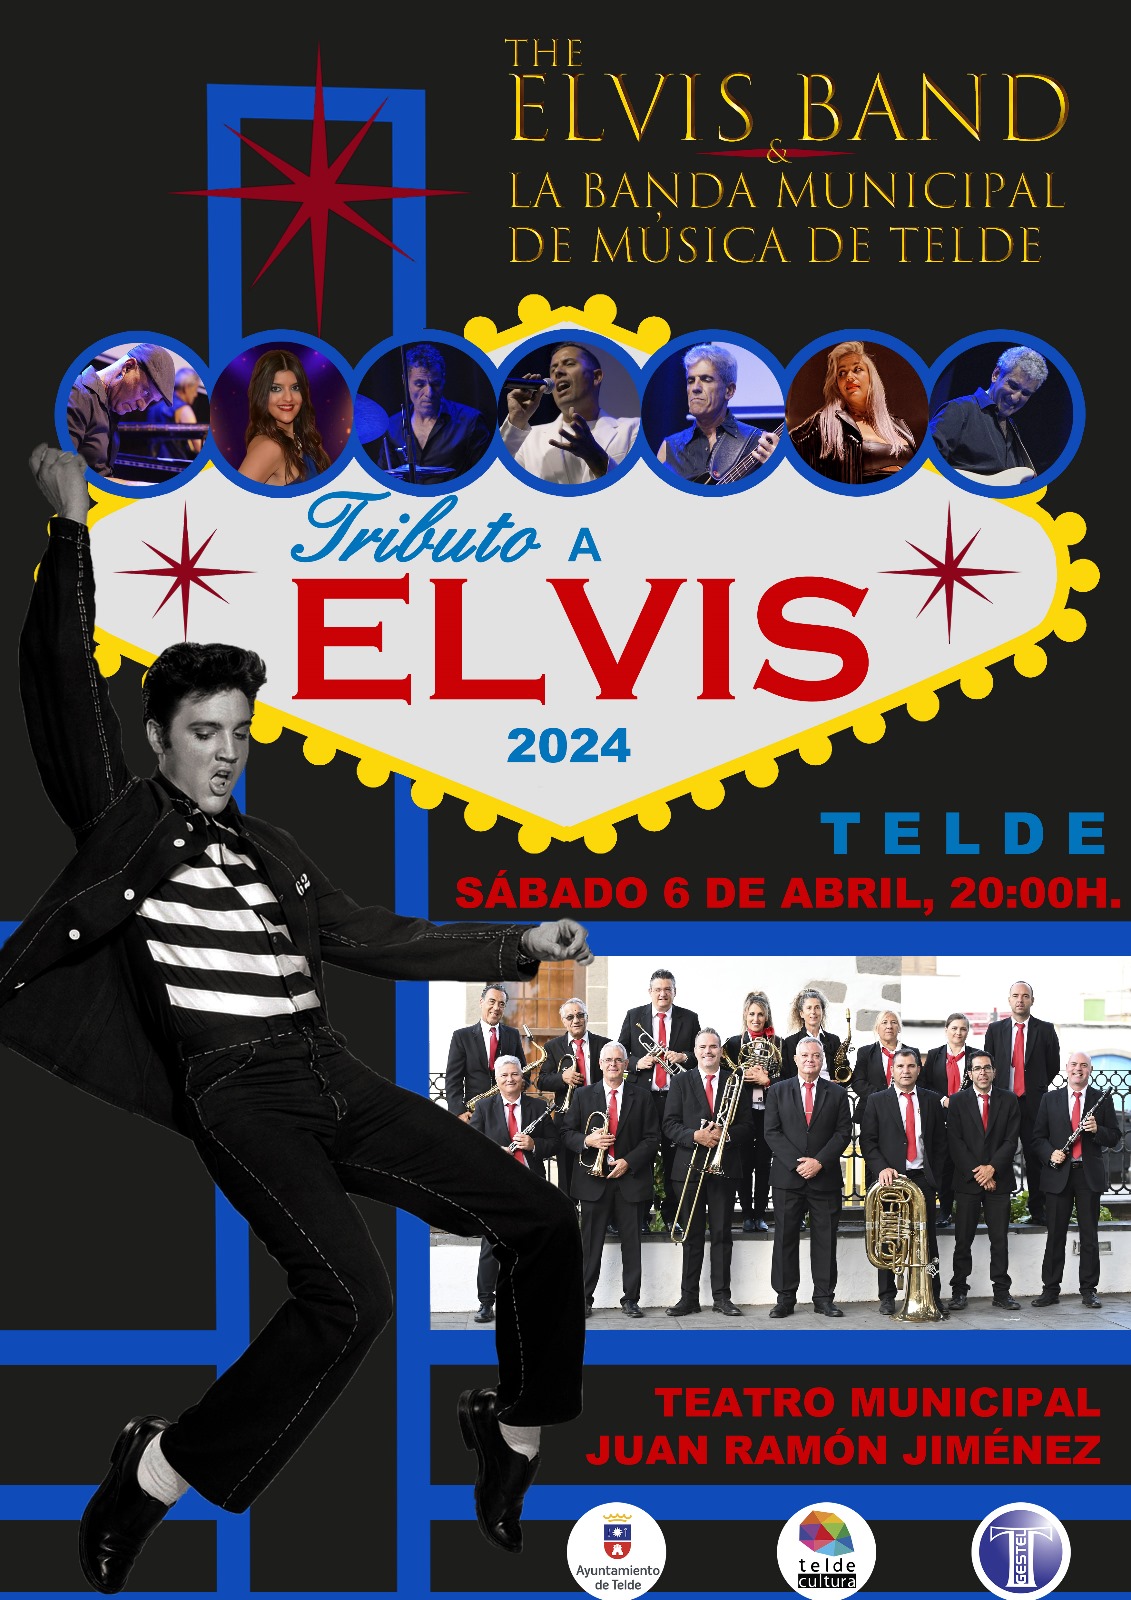 The Elvis Band & Banda Municipal de Música de Telde